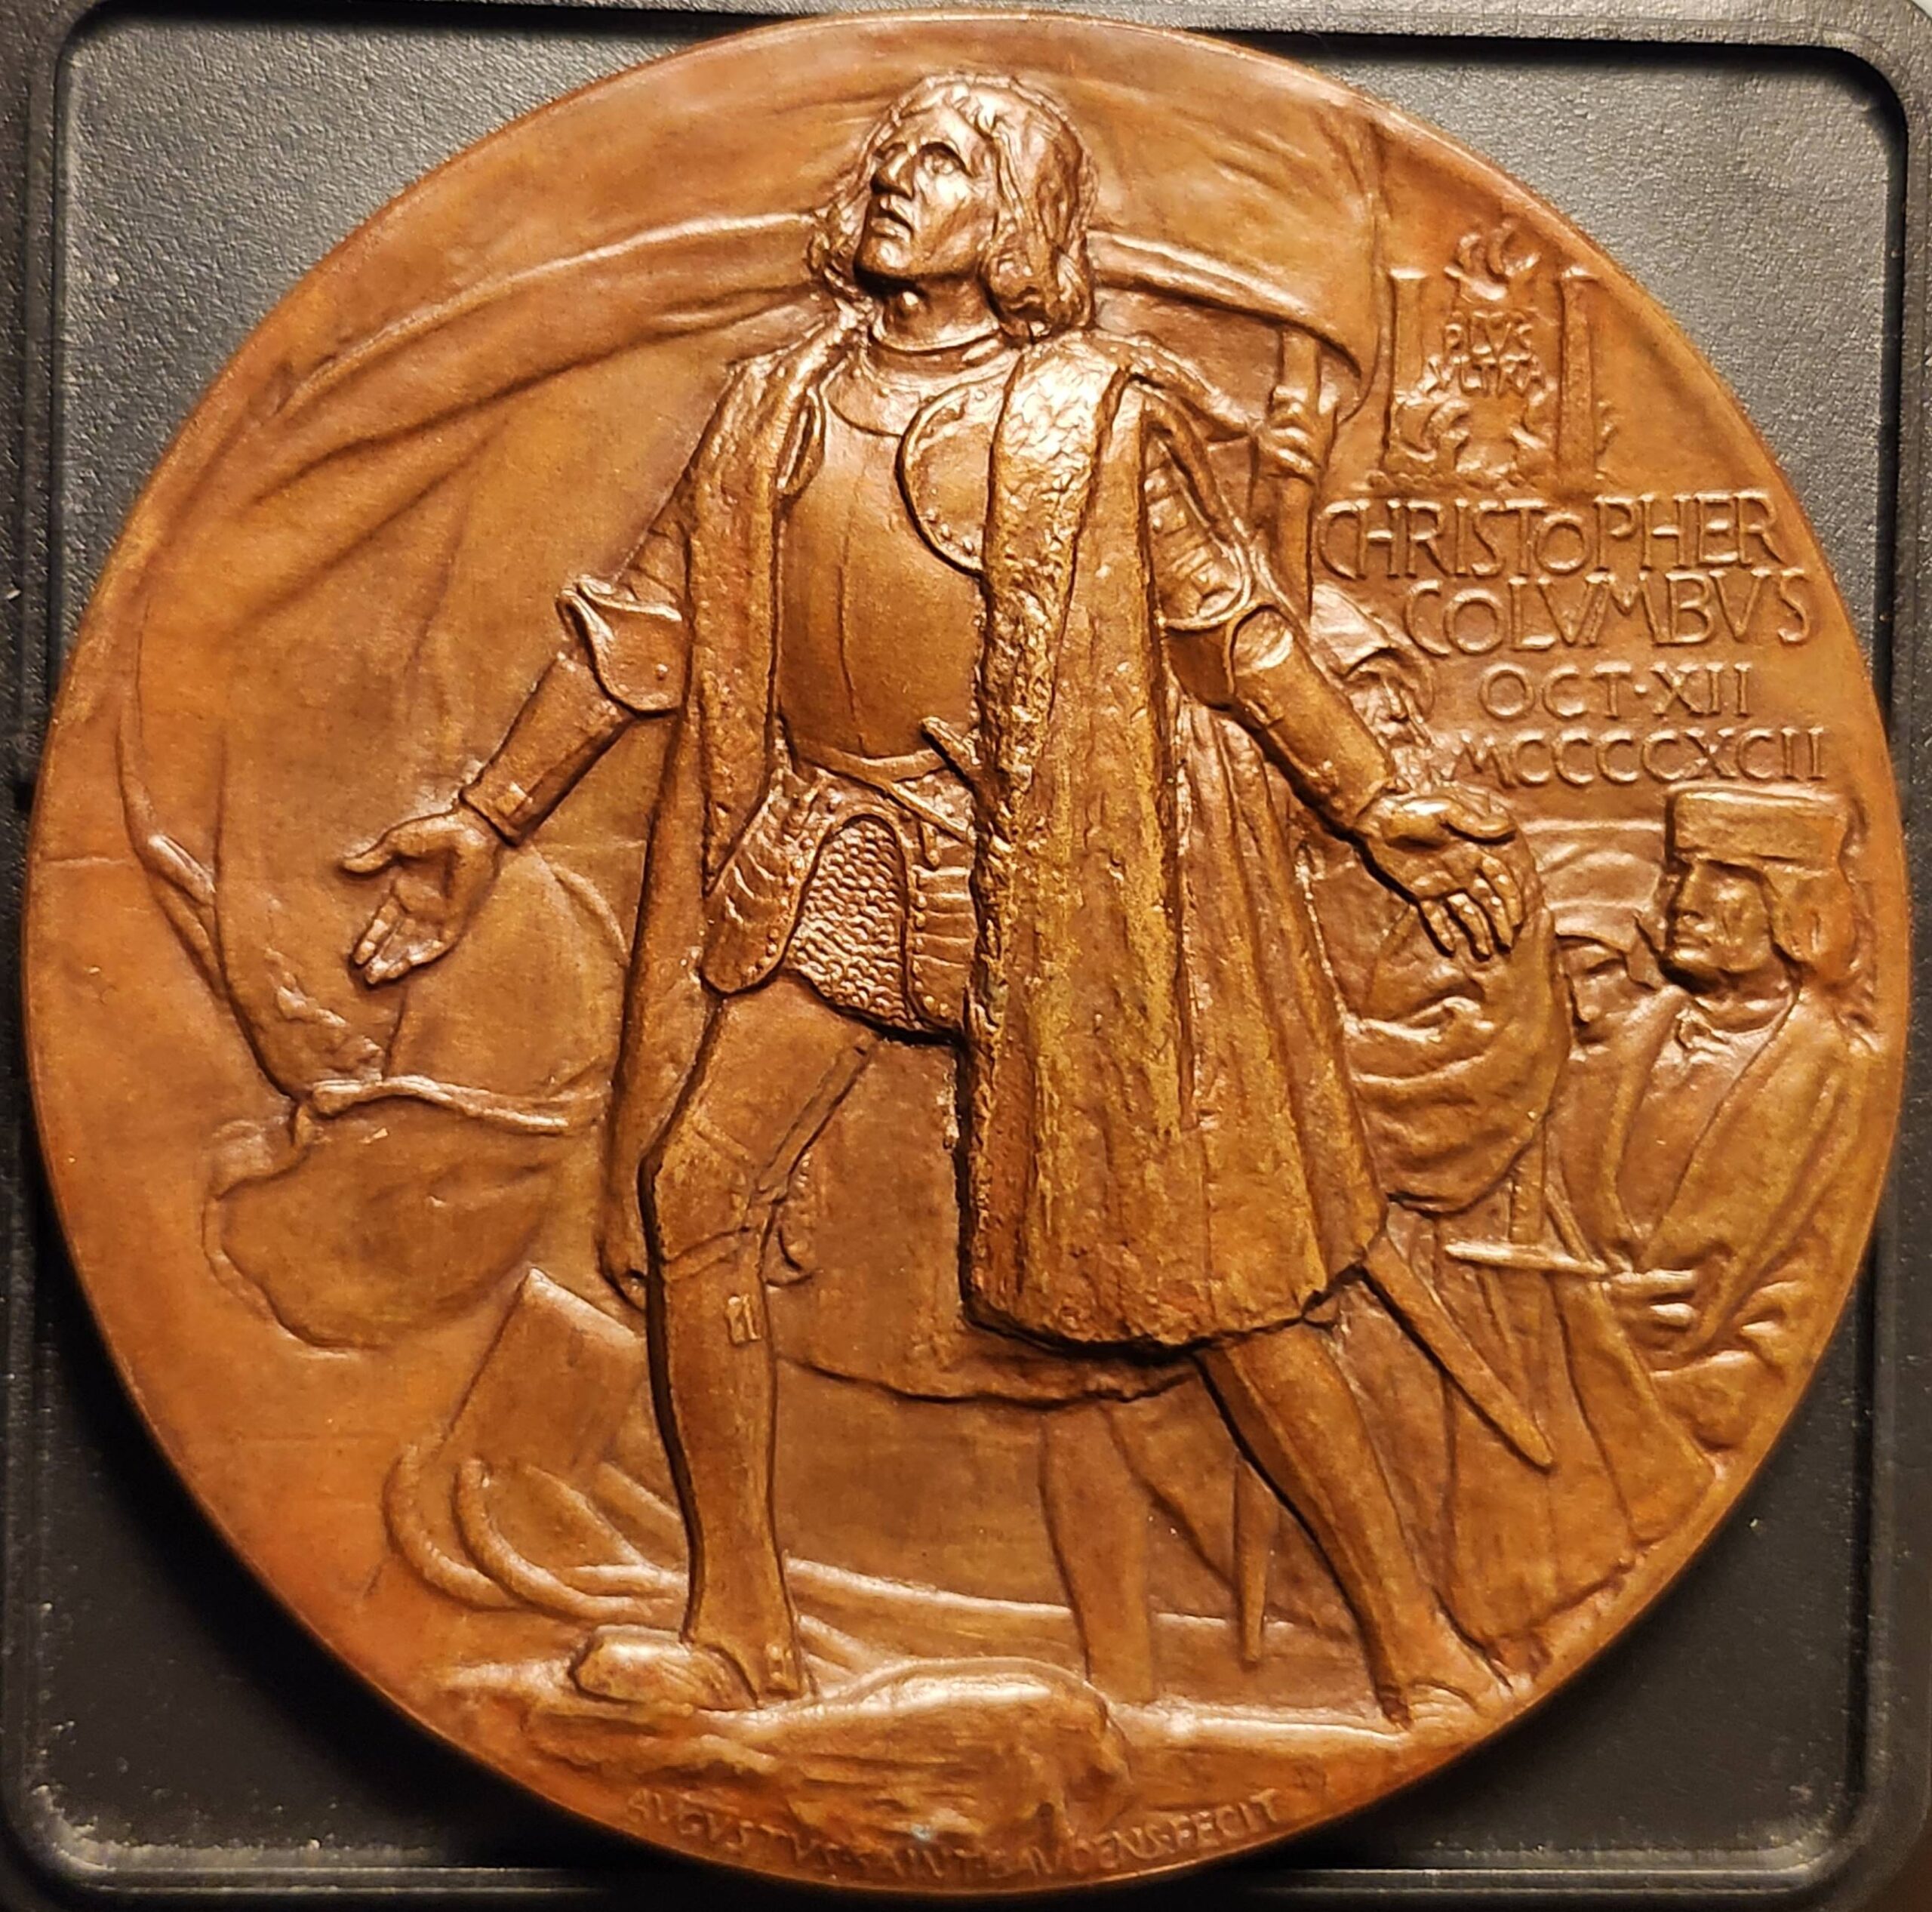 bronze award medal 1893 World's Columbian Exposition, Chicago